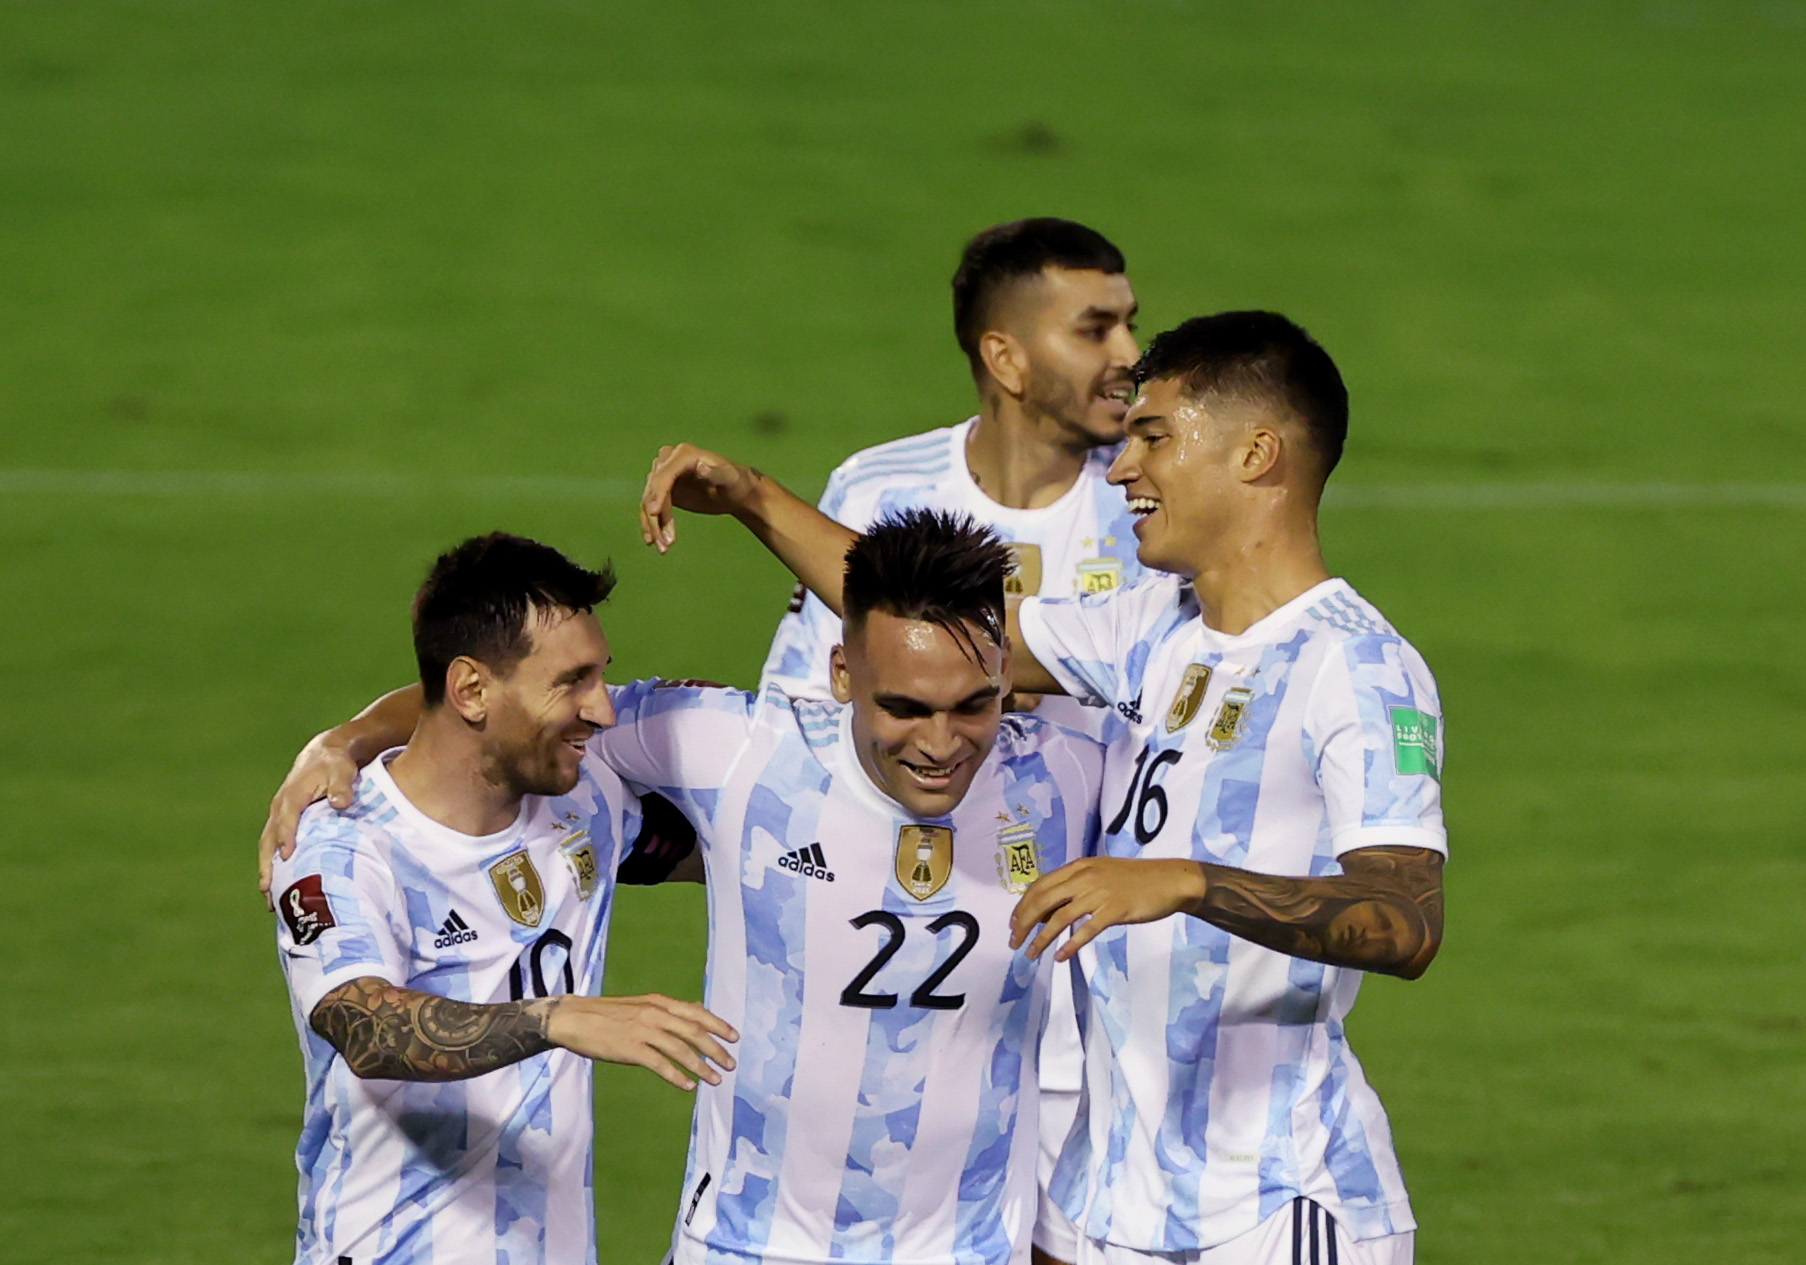 Argentina's Joaquin Correa celebrates scoring their second goal with Lionel Messi and Lautaro Martinez